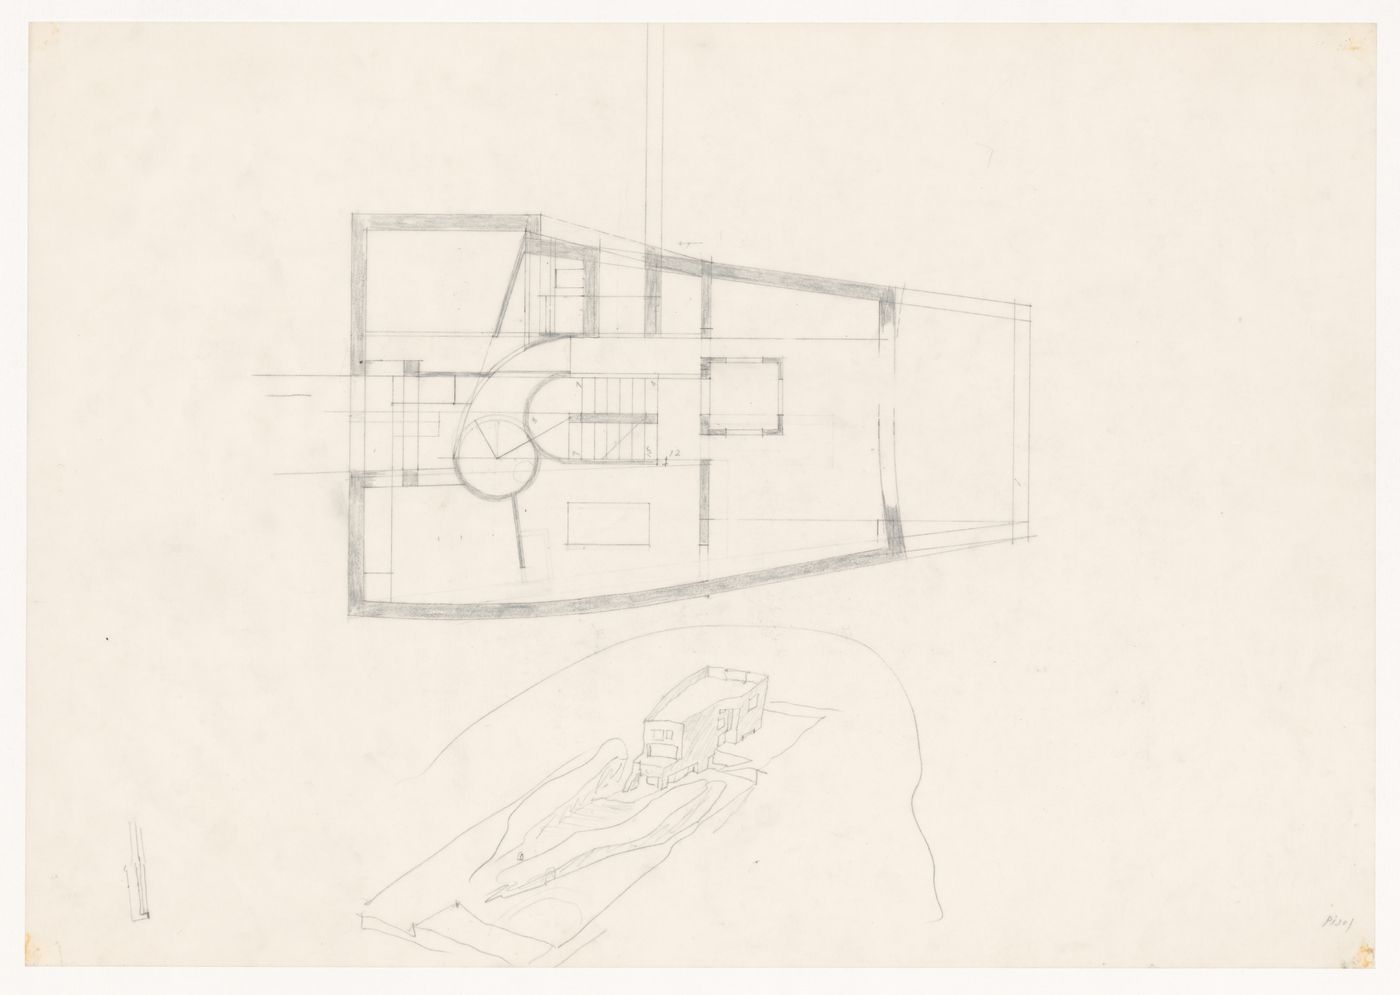 Sketch plan and axonometric for Casa Fernando Machado [Fernando Machado house], Porto, Portugal